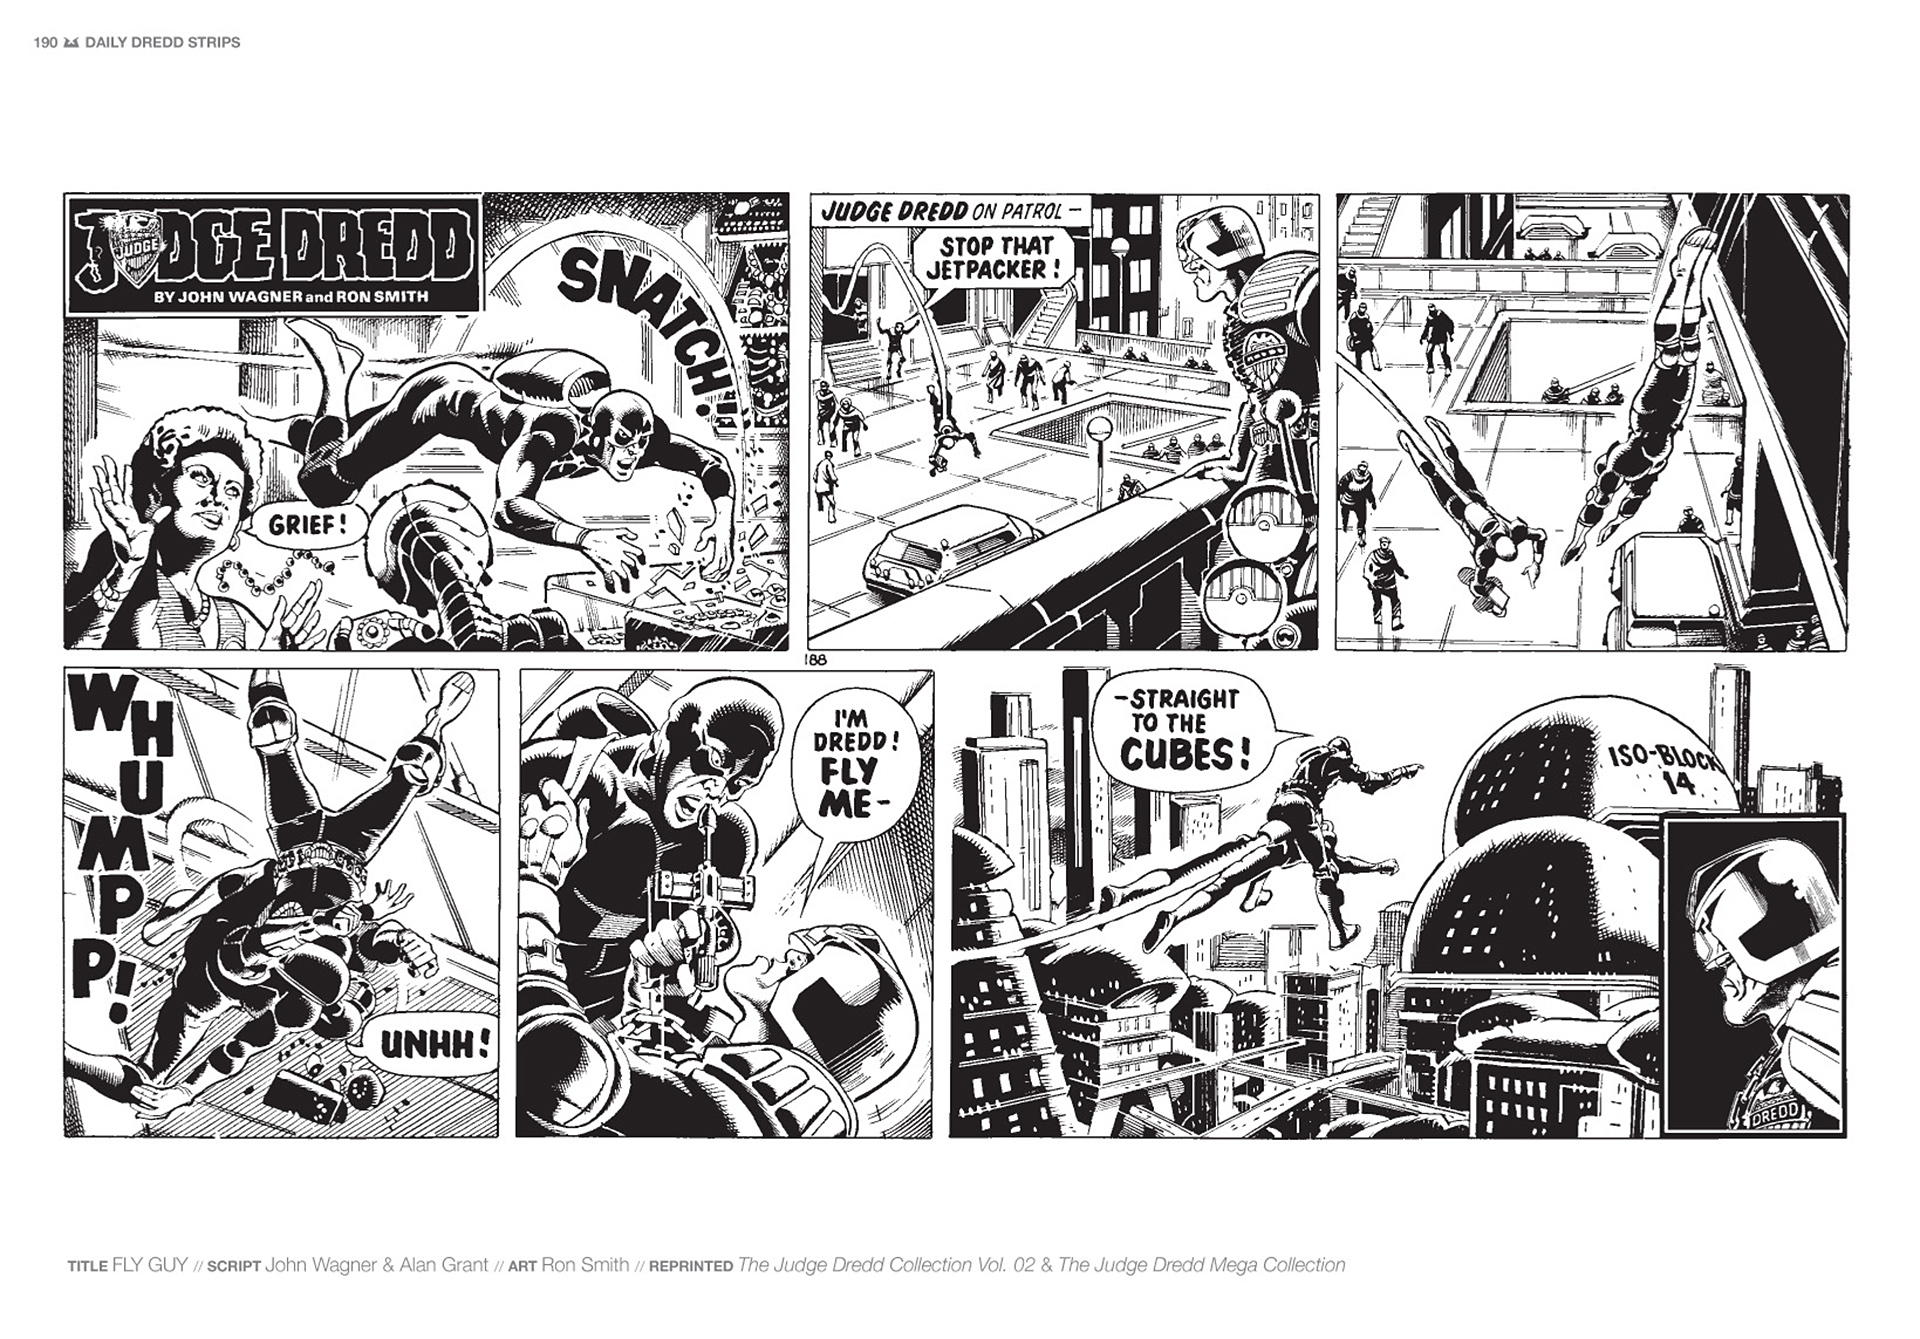 Read online Judge Dredd: The Daily Dredds comic -  Issue # TPB 1 - 193